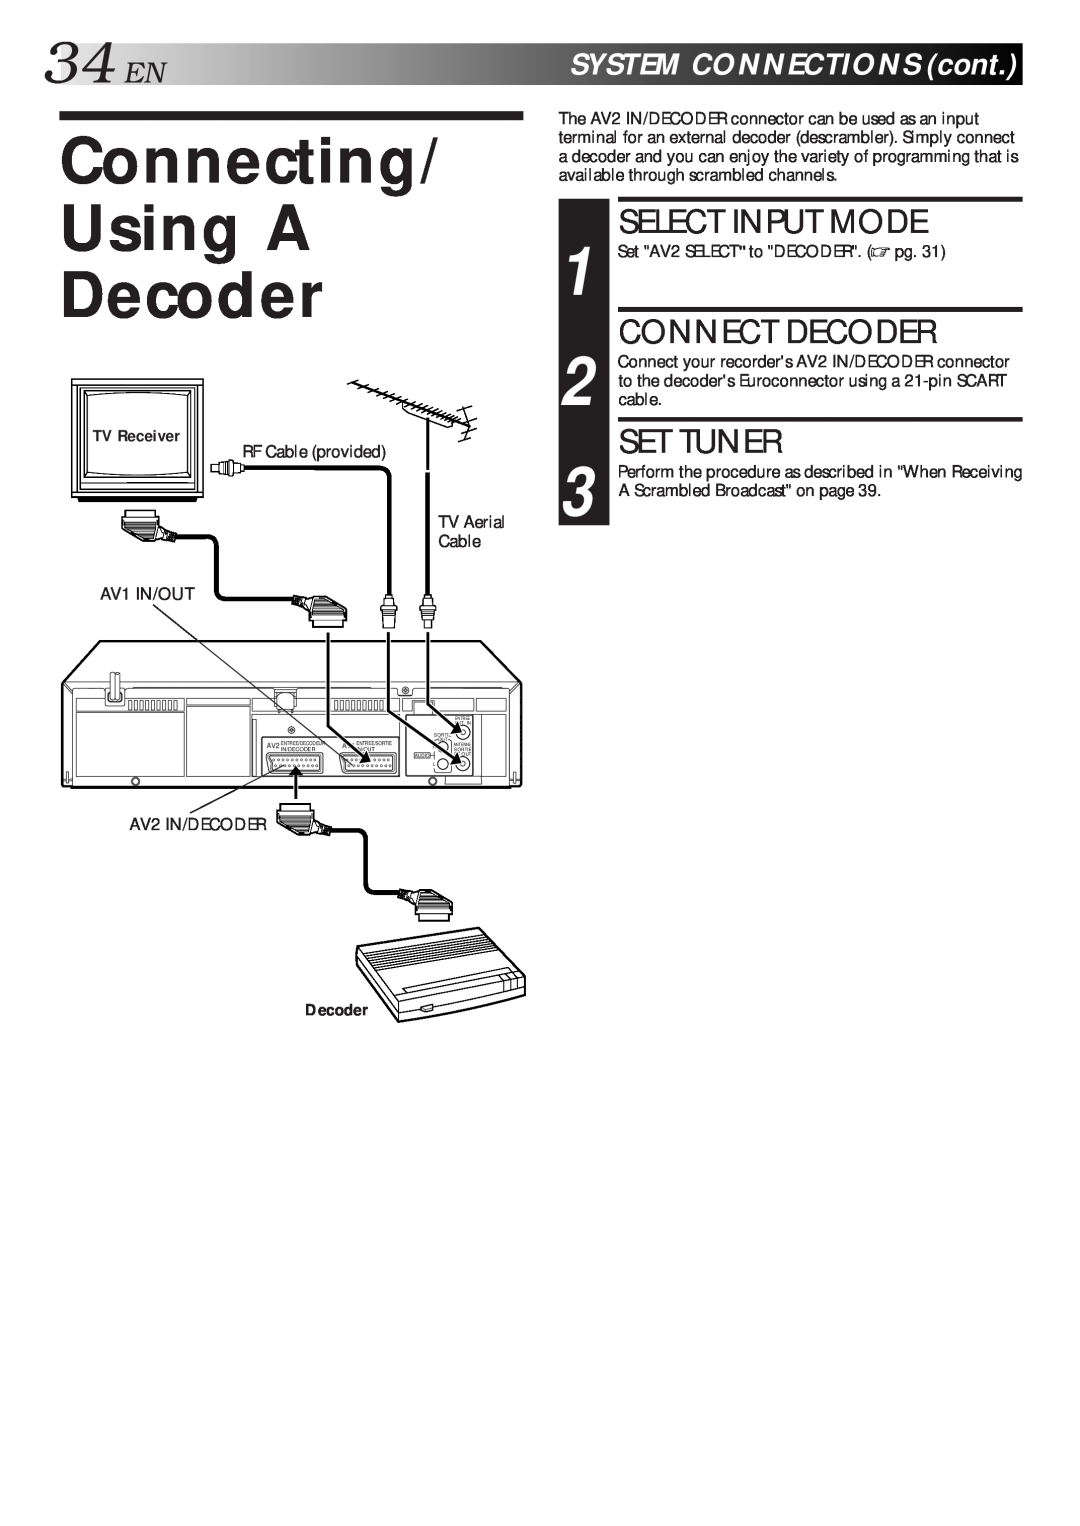 JVC HR-J712EU Connecting Using A Decoder, Select Input Mode, Connect Decoder, Set Tuner, 34ENSYSTEMCONNECTIONScont 